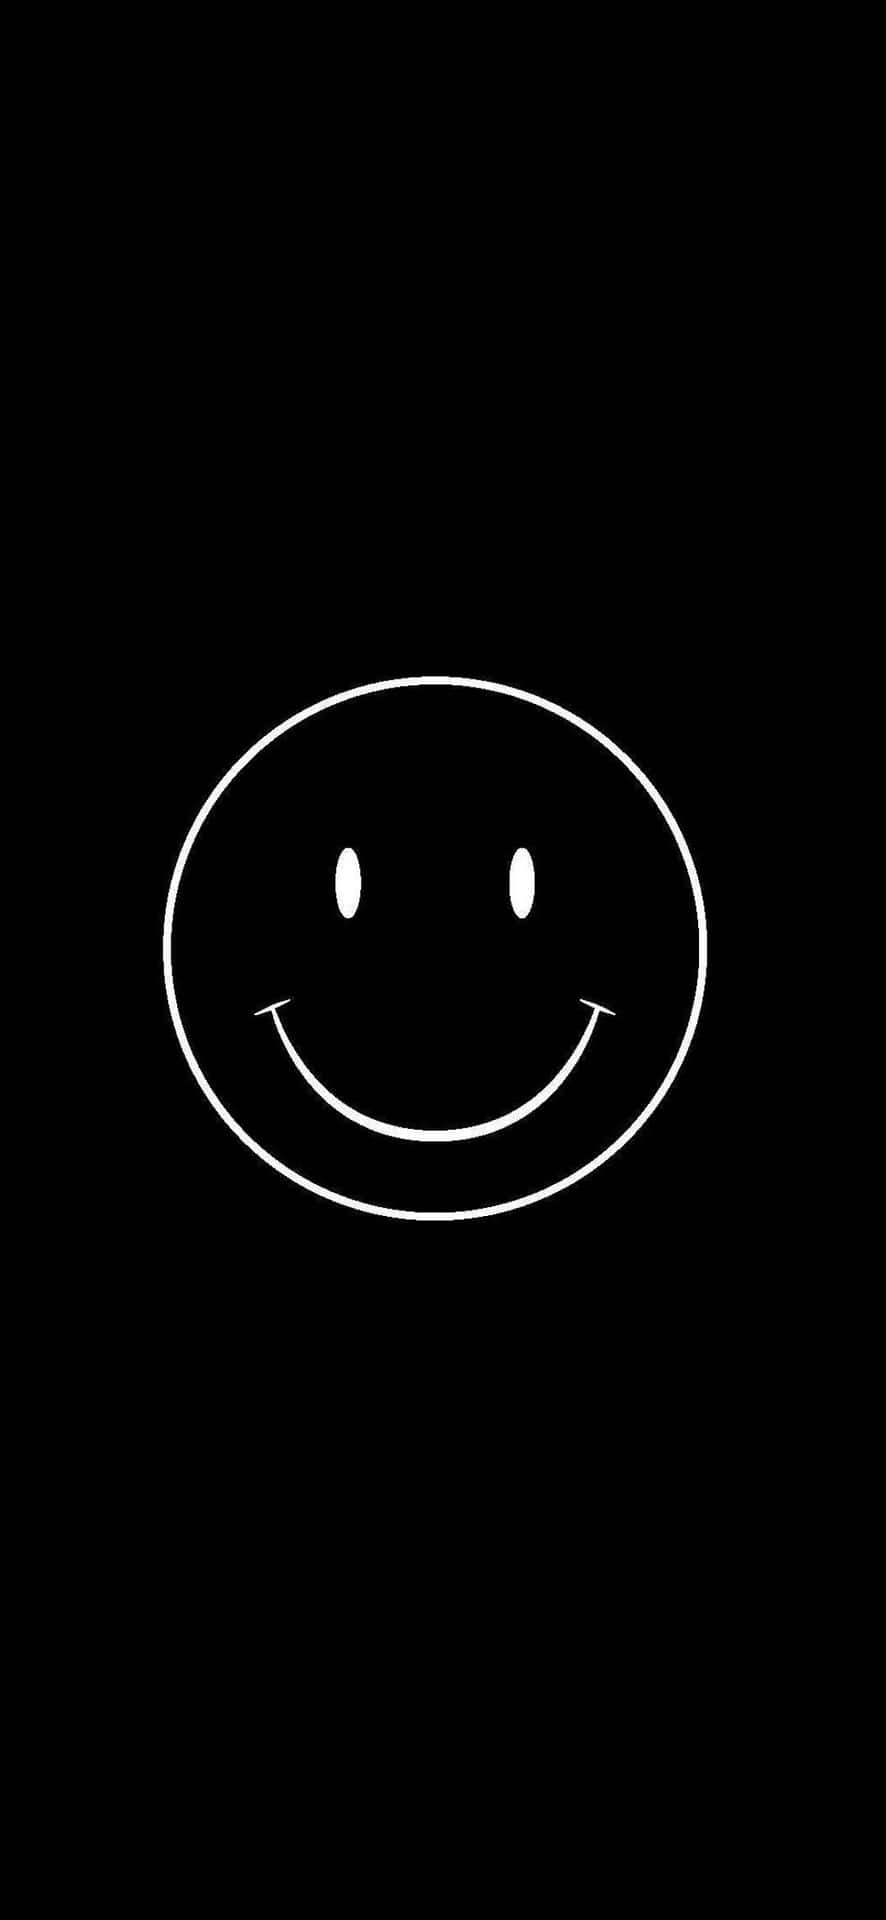 Smile emoji wallpaper by Peerfaysal0  Download on ZEDGE  da18